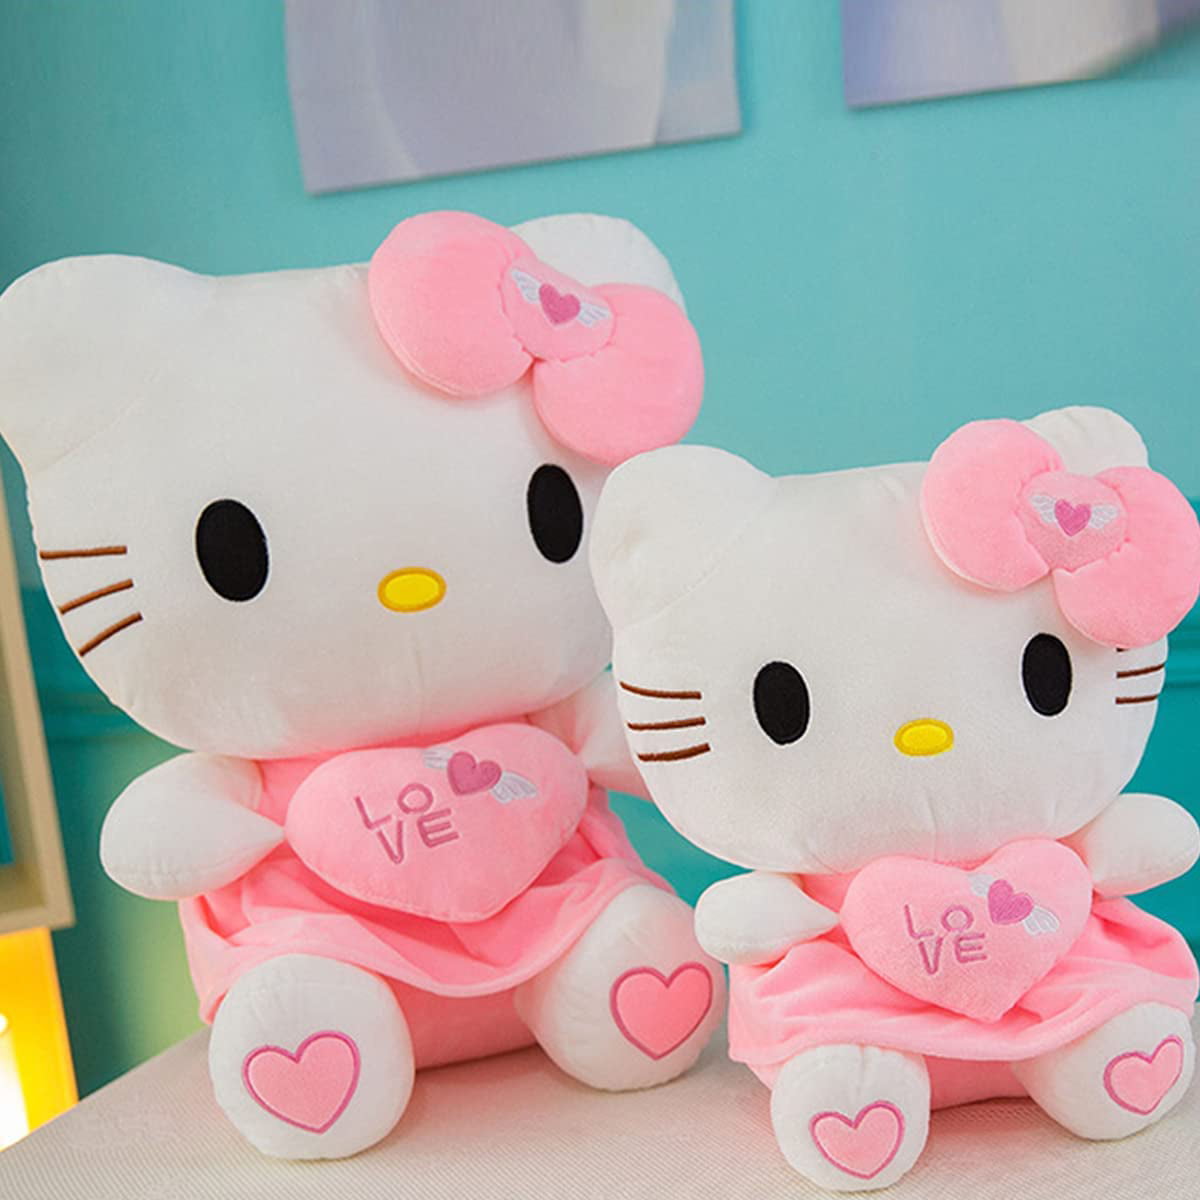 NA Cute Hello Kitty Plush Toy Kitten Stuffed Animals Kawaii Cat Fluffy Plush Doll Hugging Pillow with Love Heart 9.8 Inch 